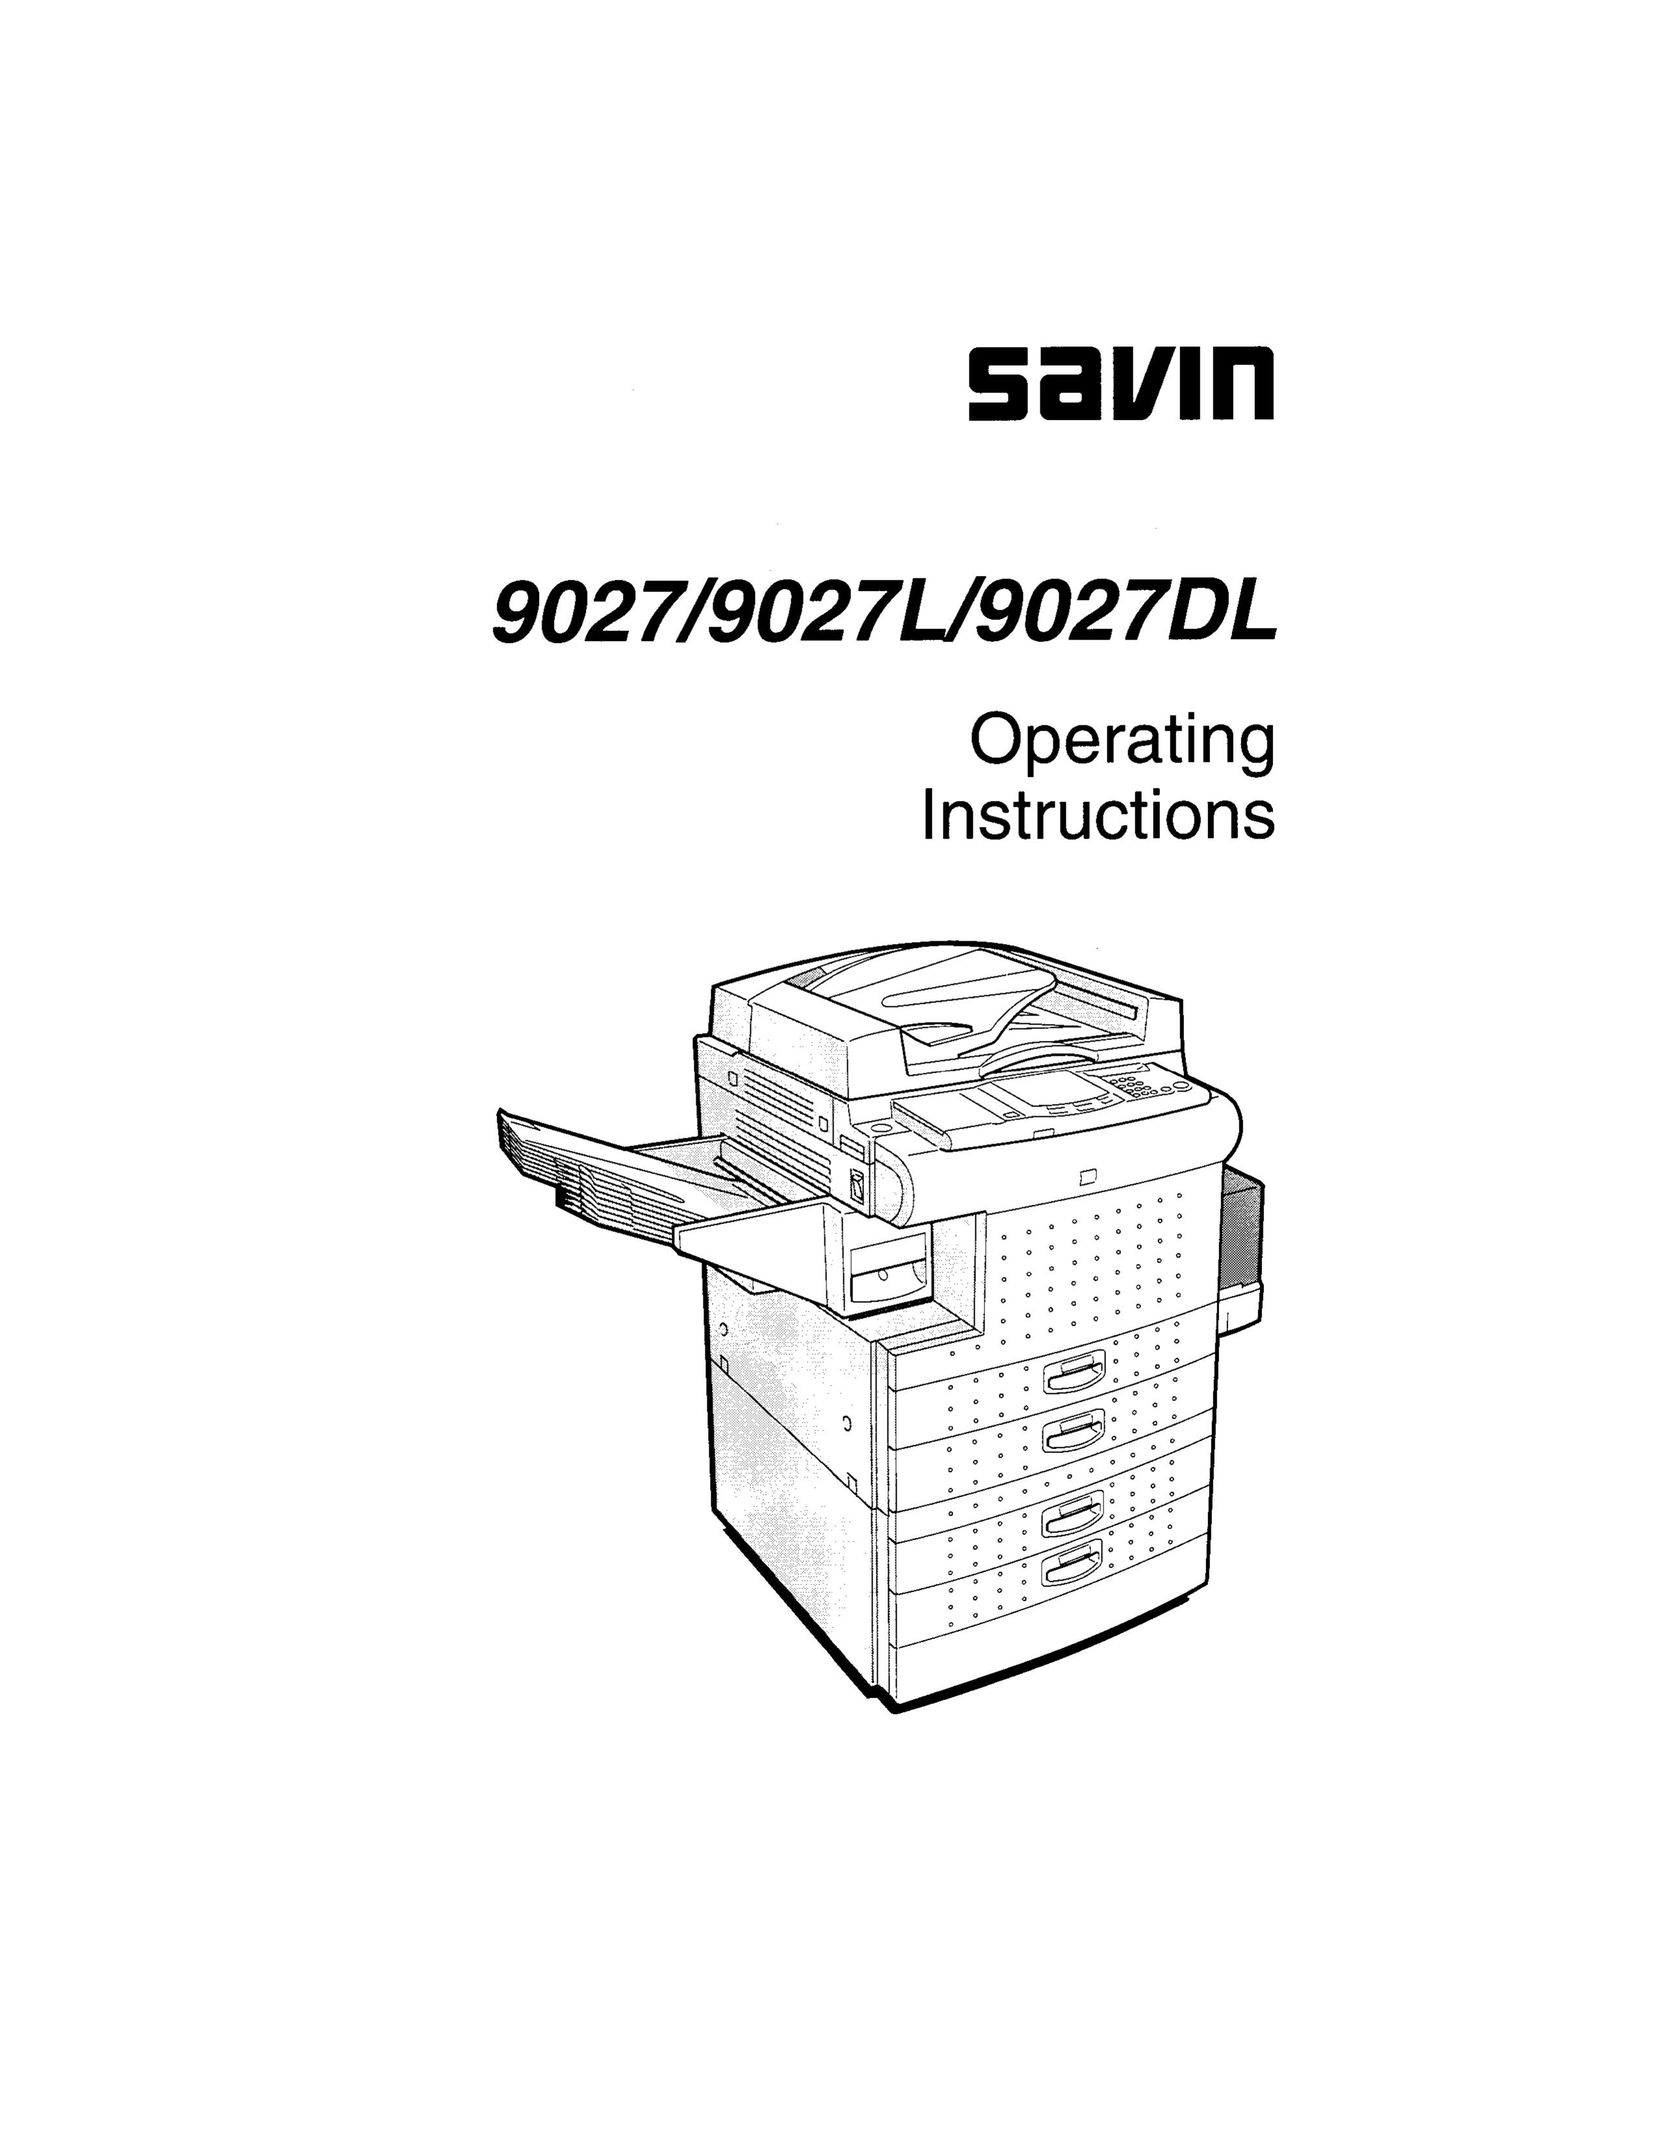 Savin 9027 All in One Printer User Manual